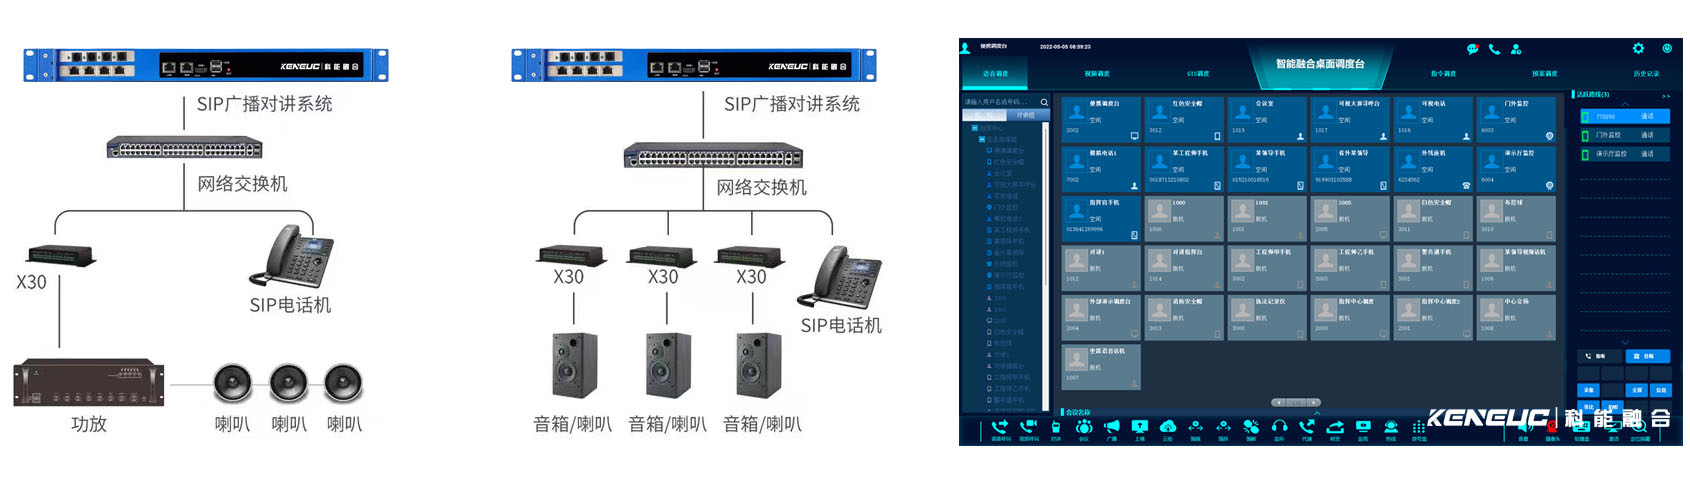 SIP广播系统架构